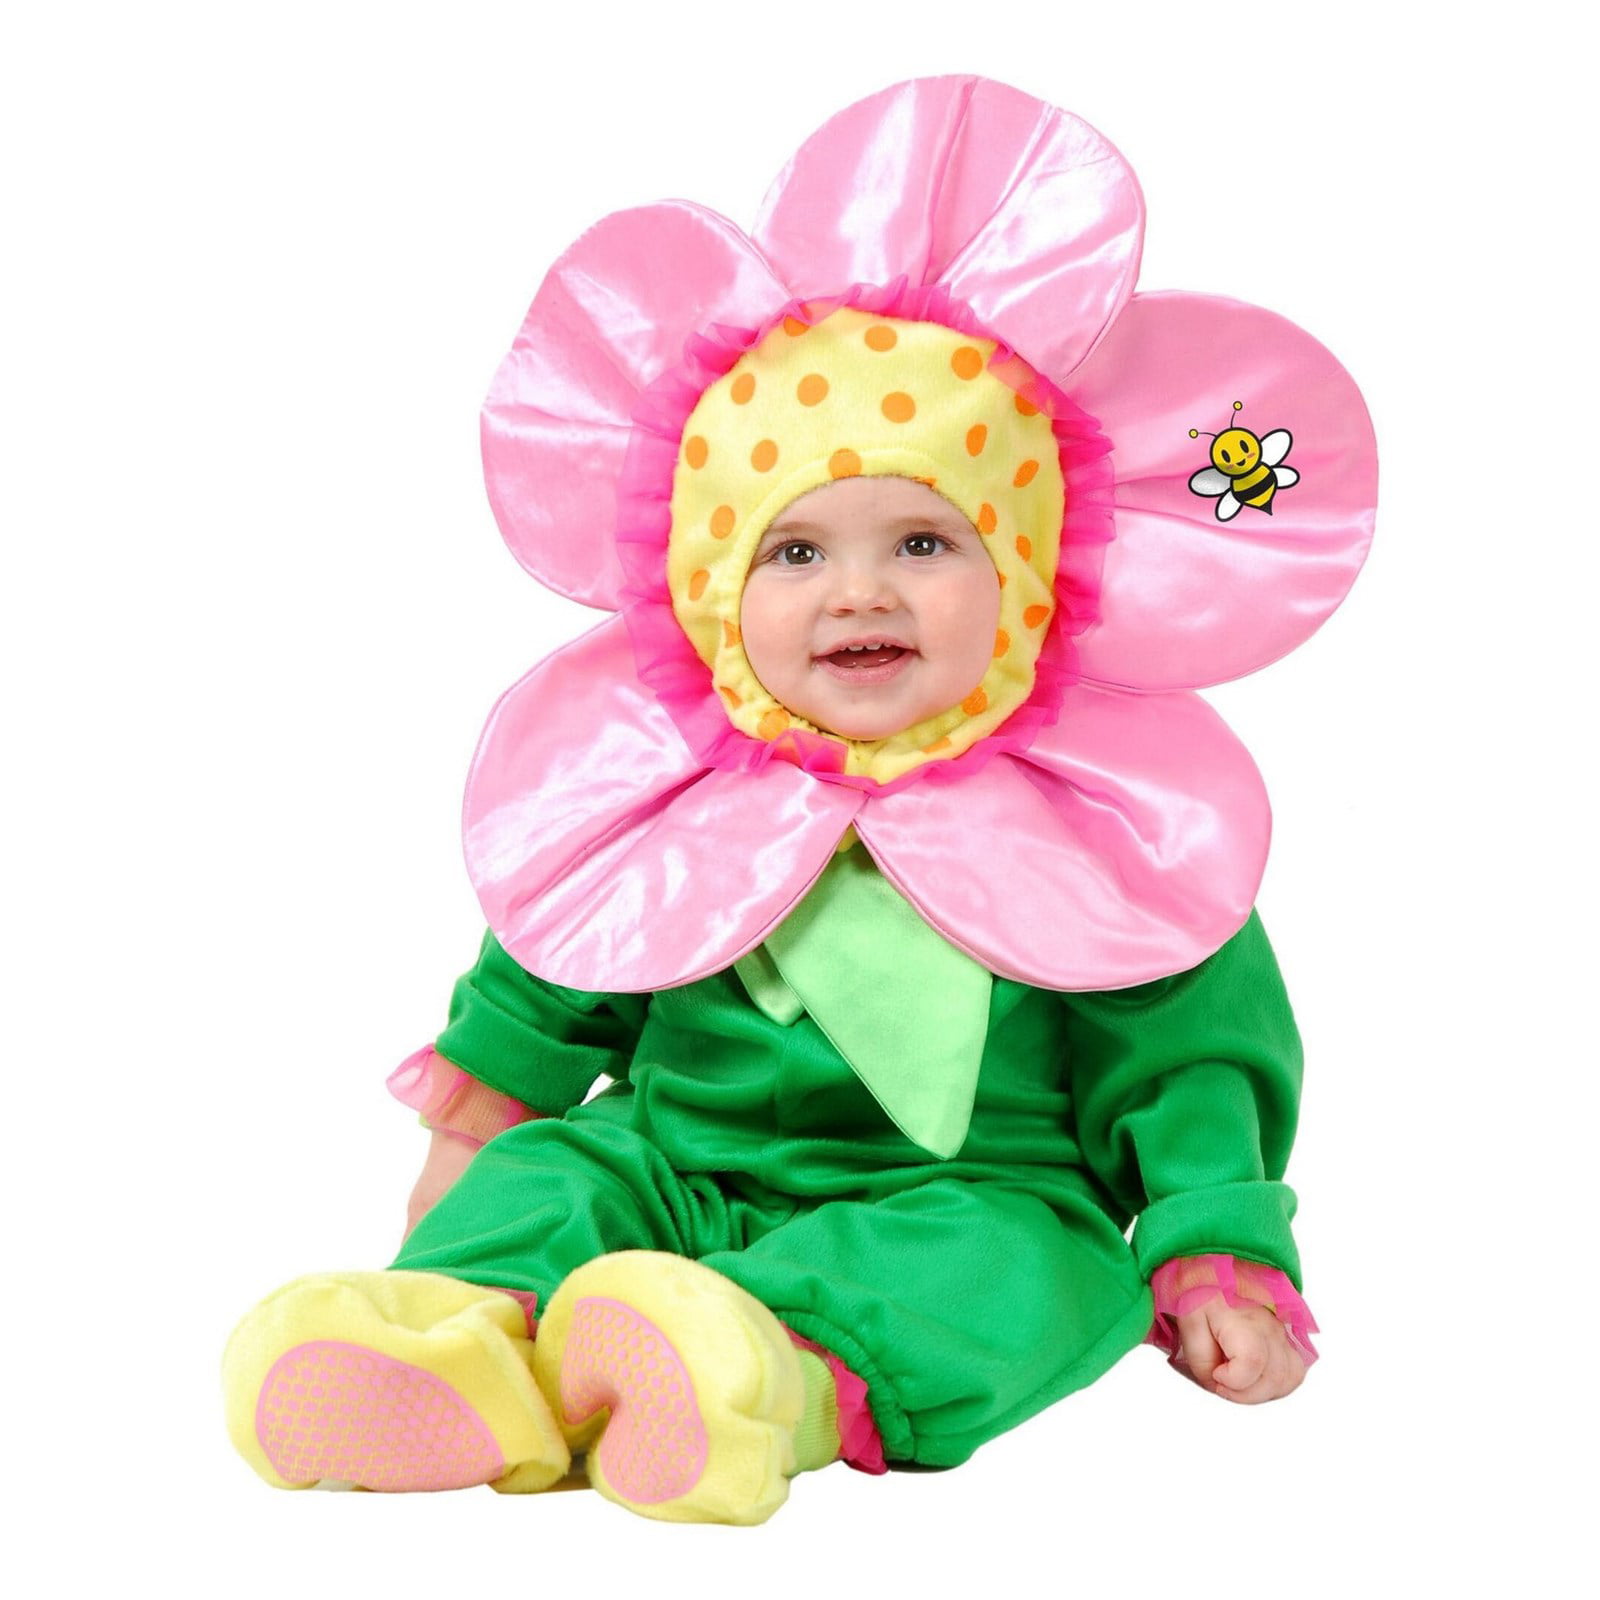 Adorable Baby Pumpkin Costume Pumpkin Tutu Dress For Baby Girl 6-18 Months Baby Halloween